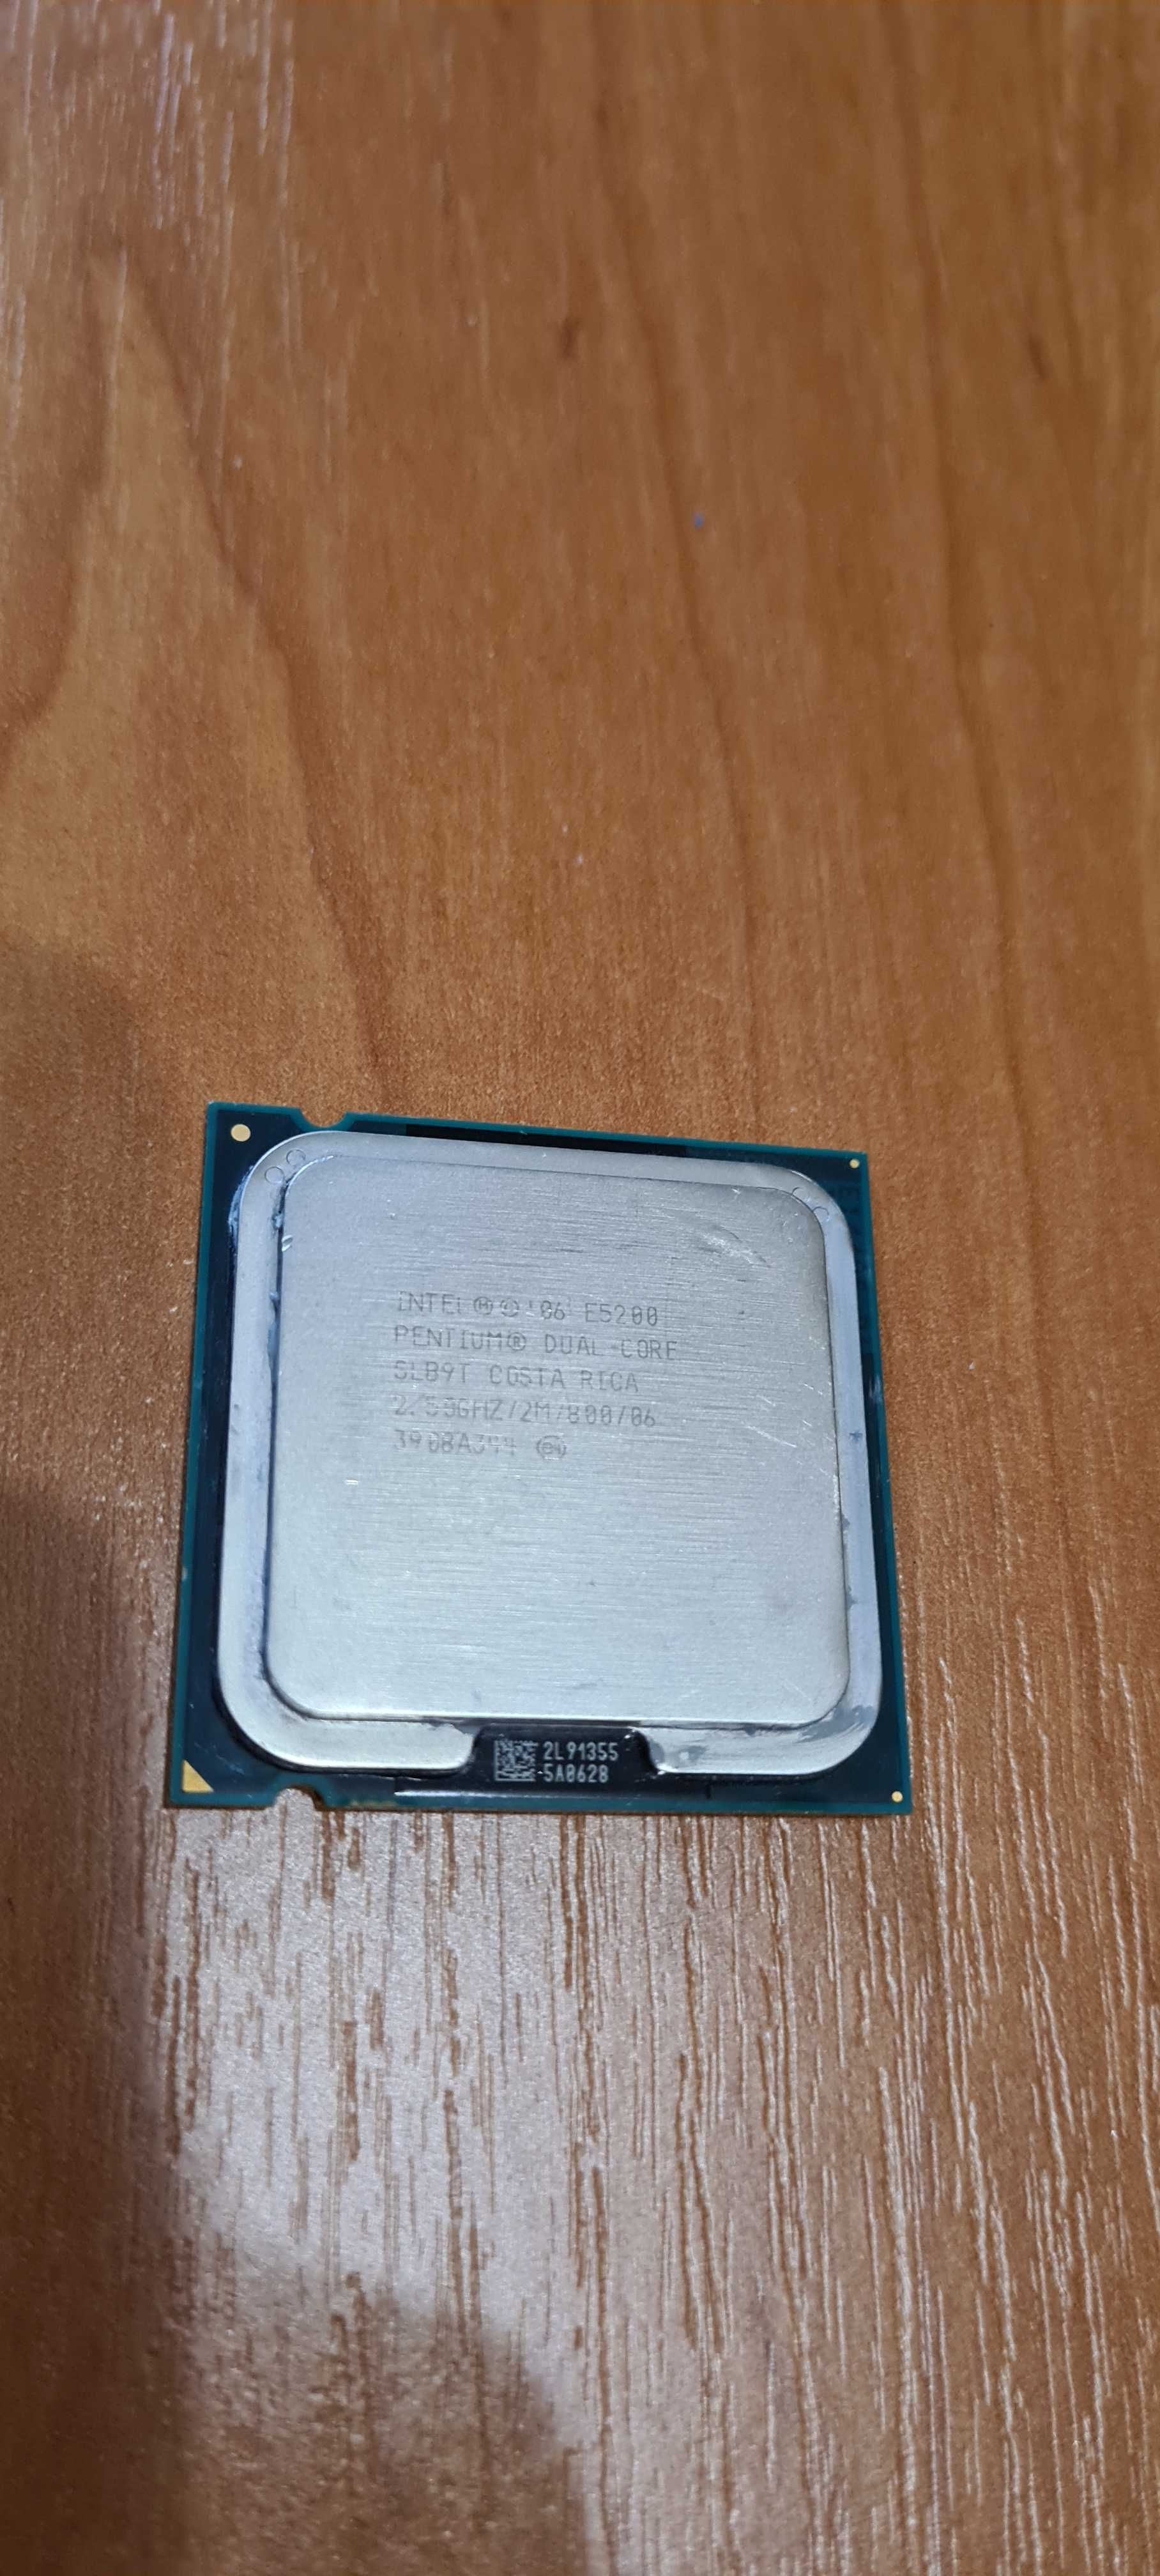 Procesor Intel Pentium Dual Core E5200 Używany